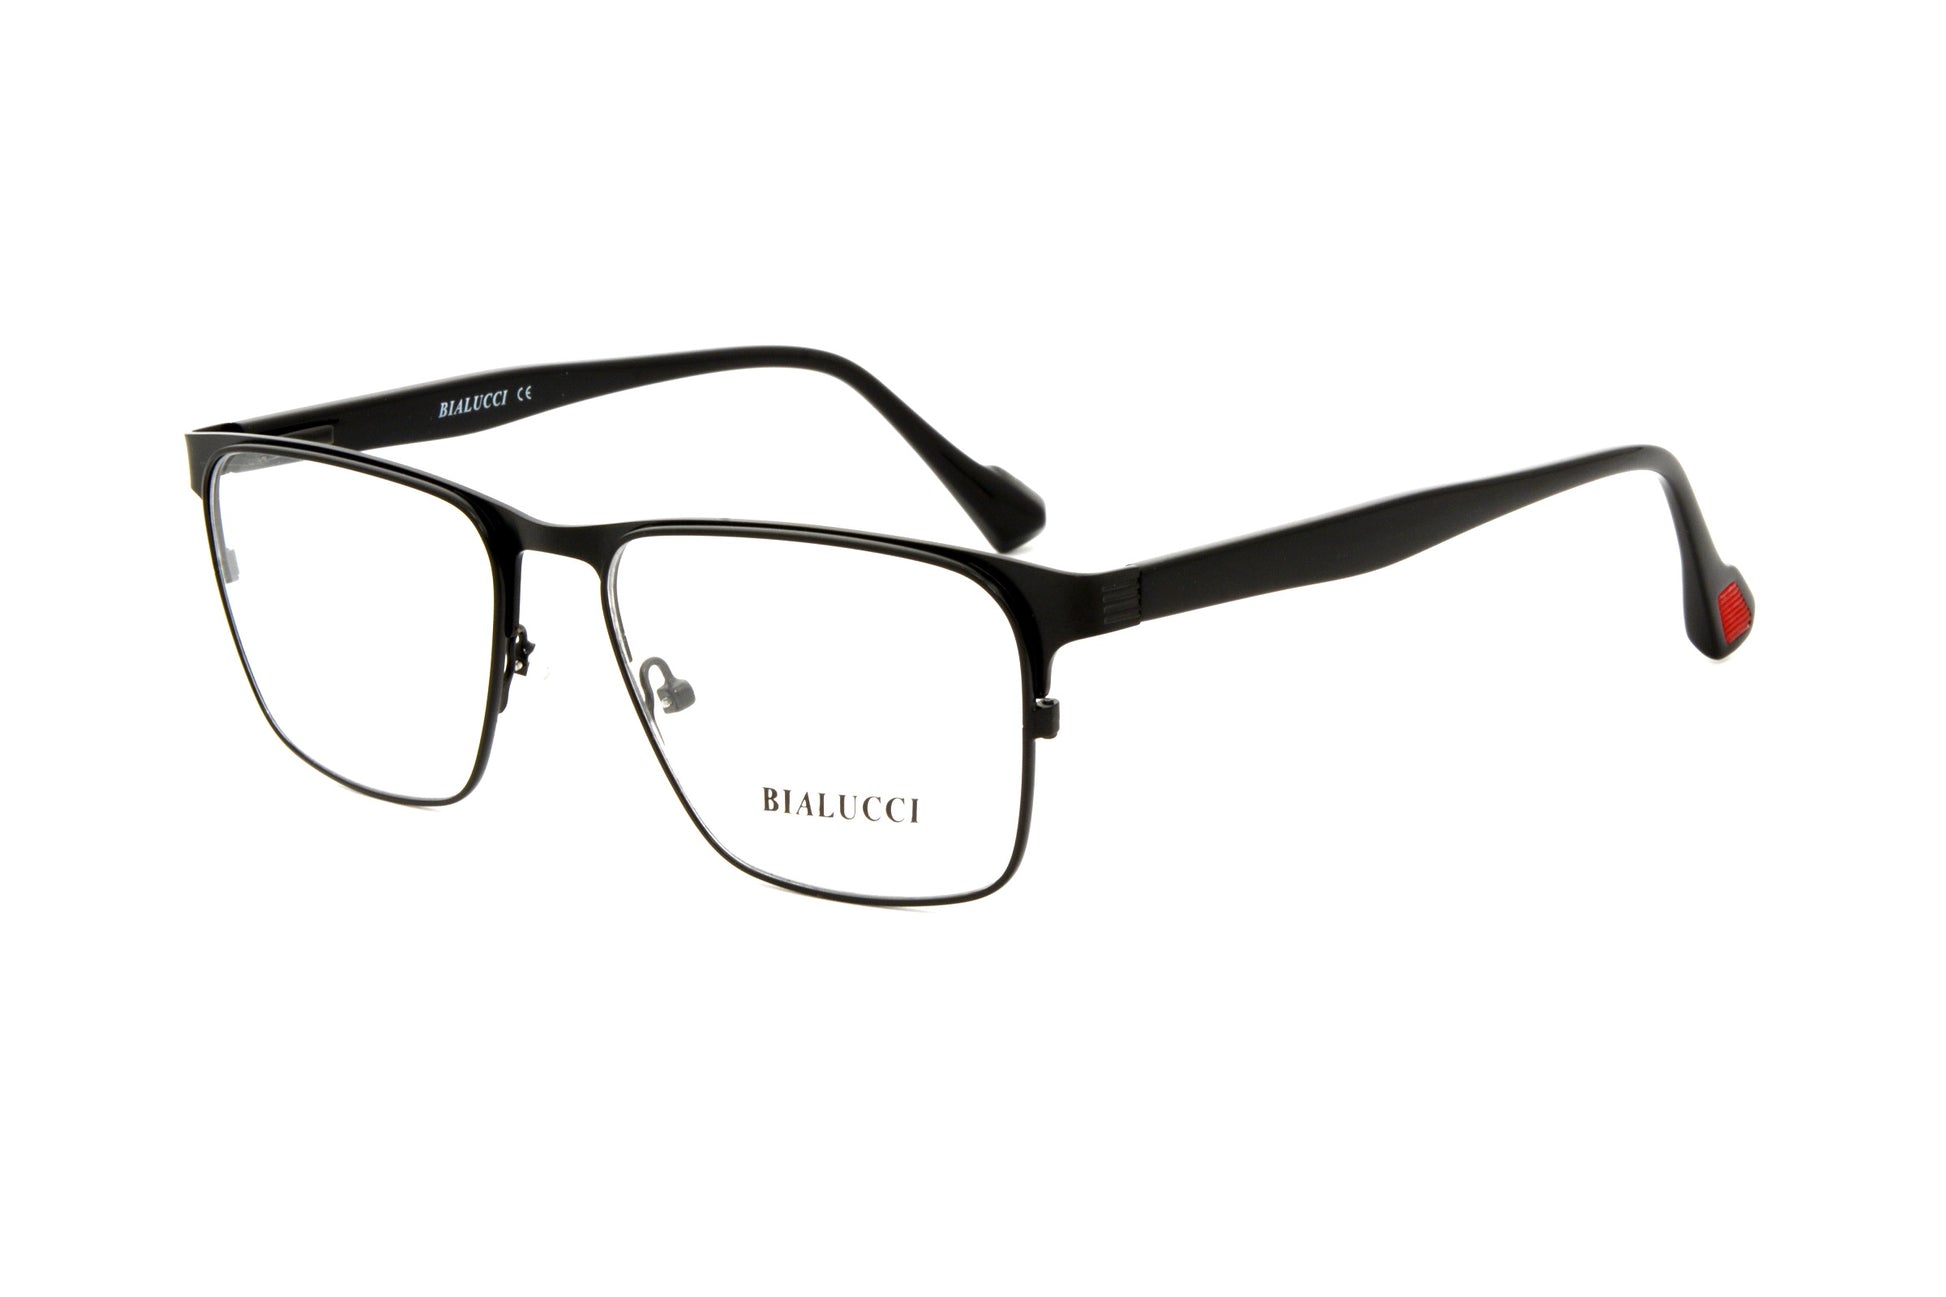 Bialucci eyewear XTK 61016 C1